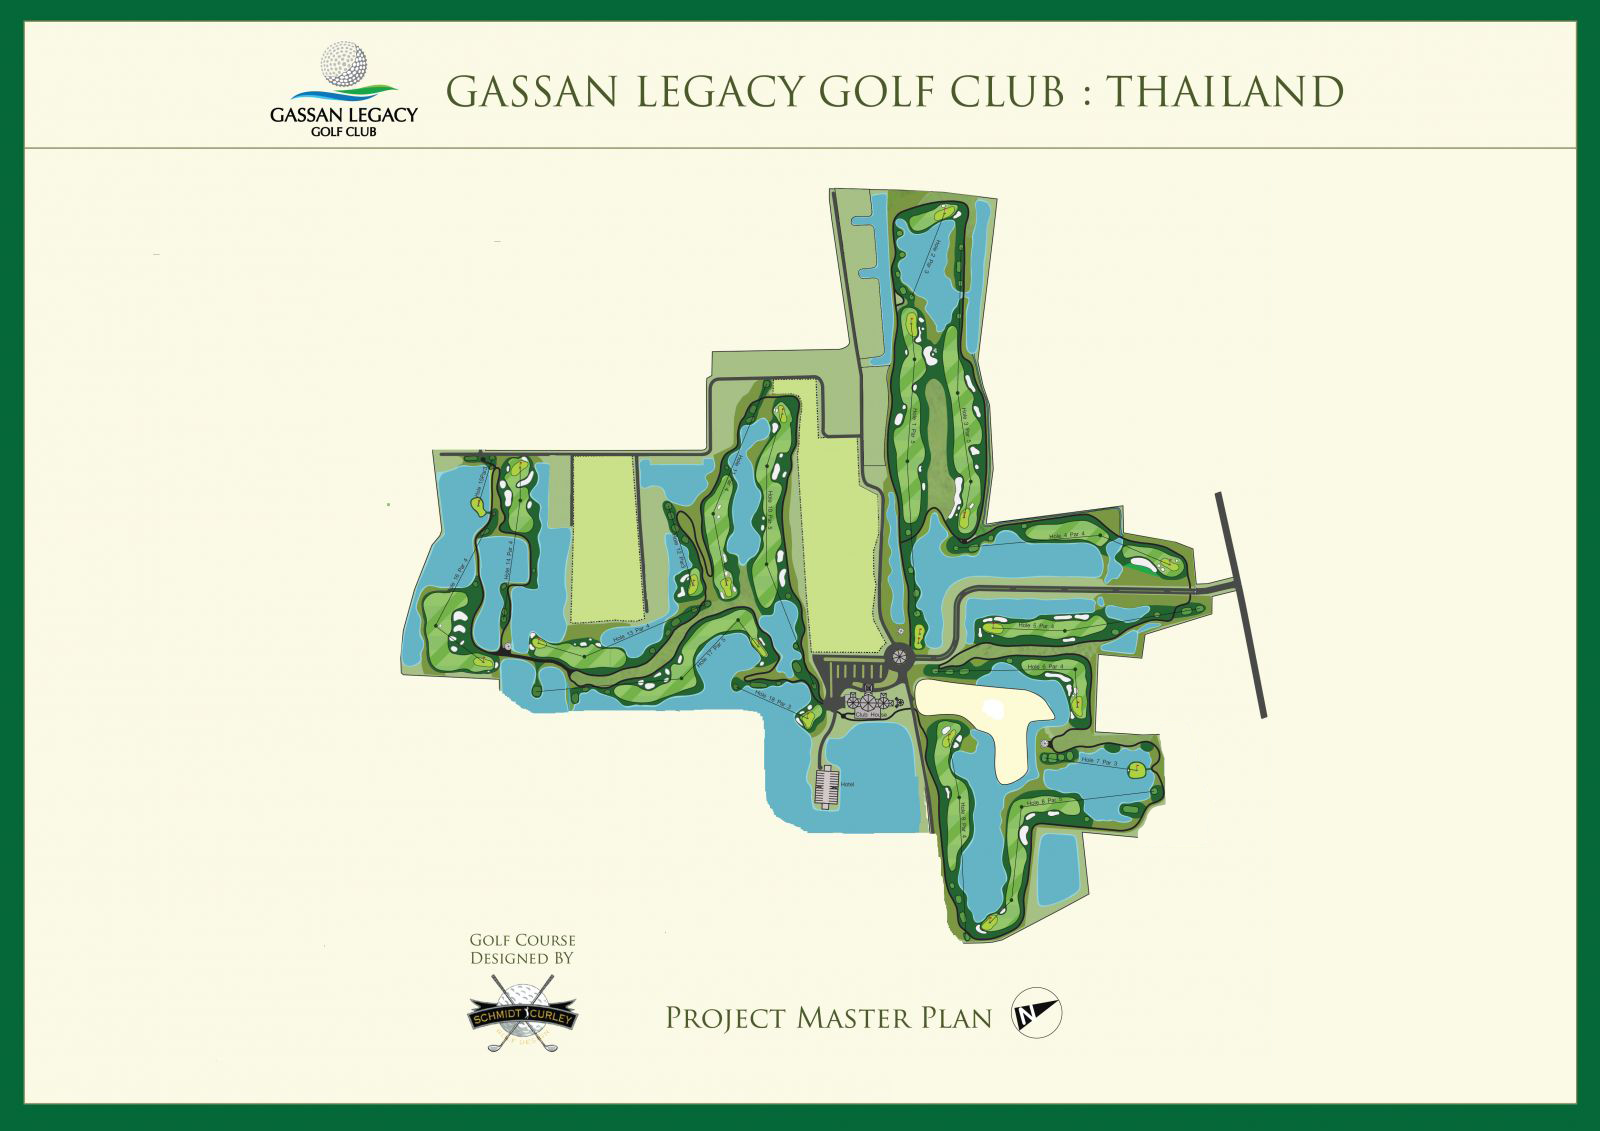 Gassan Legacy Golf Club Course layout